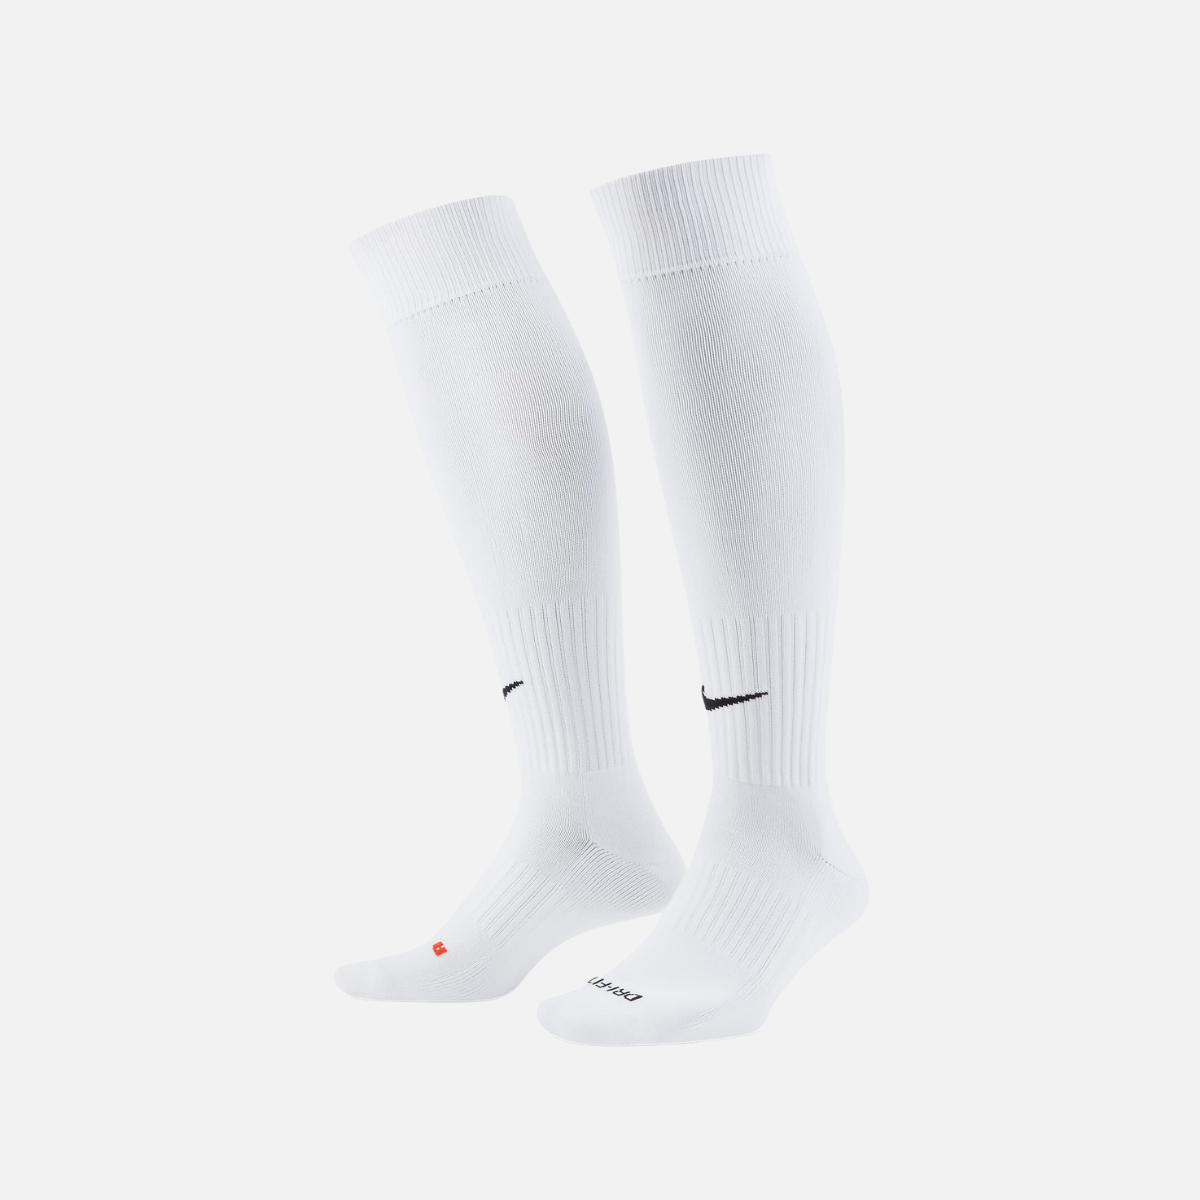 Nike Academy Over the Calf Football Socks - White/Black